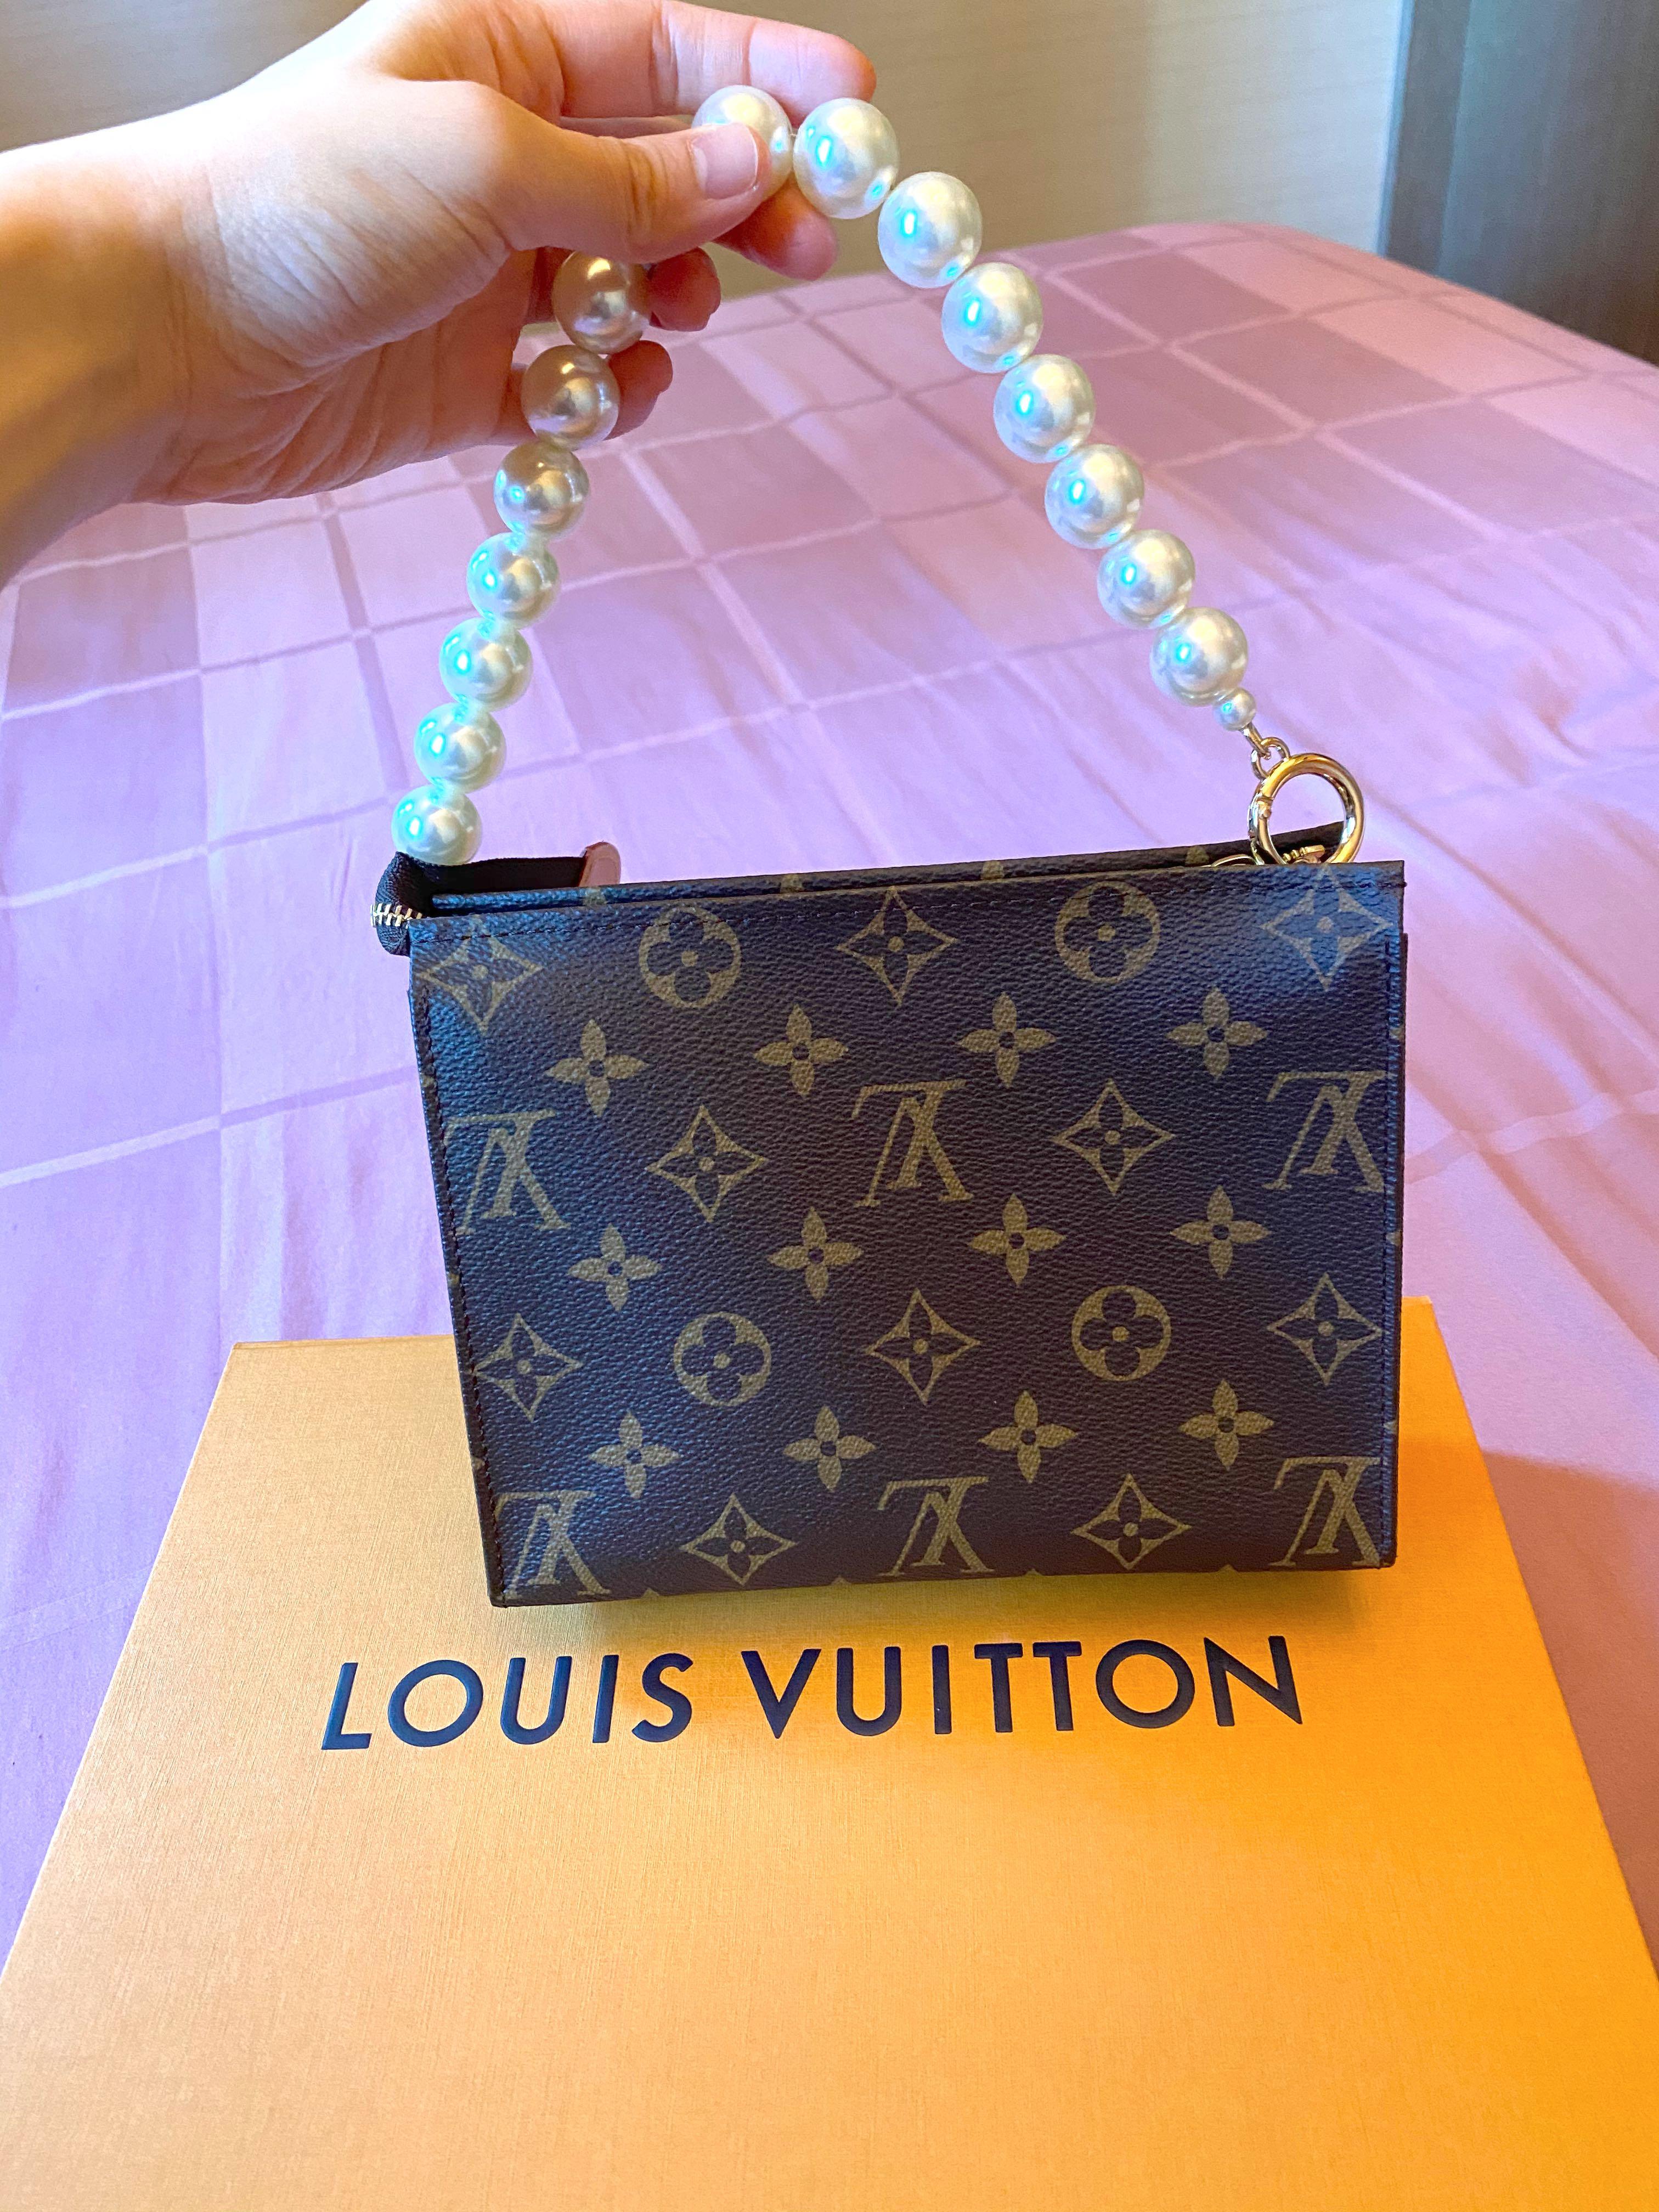 Louis Vuitton toiletry 26. Clutch  Outfits, Fashion, Mom fashion